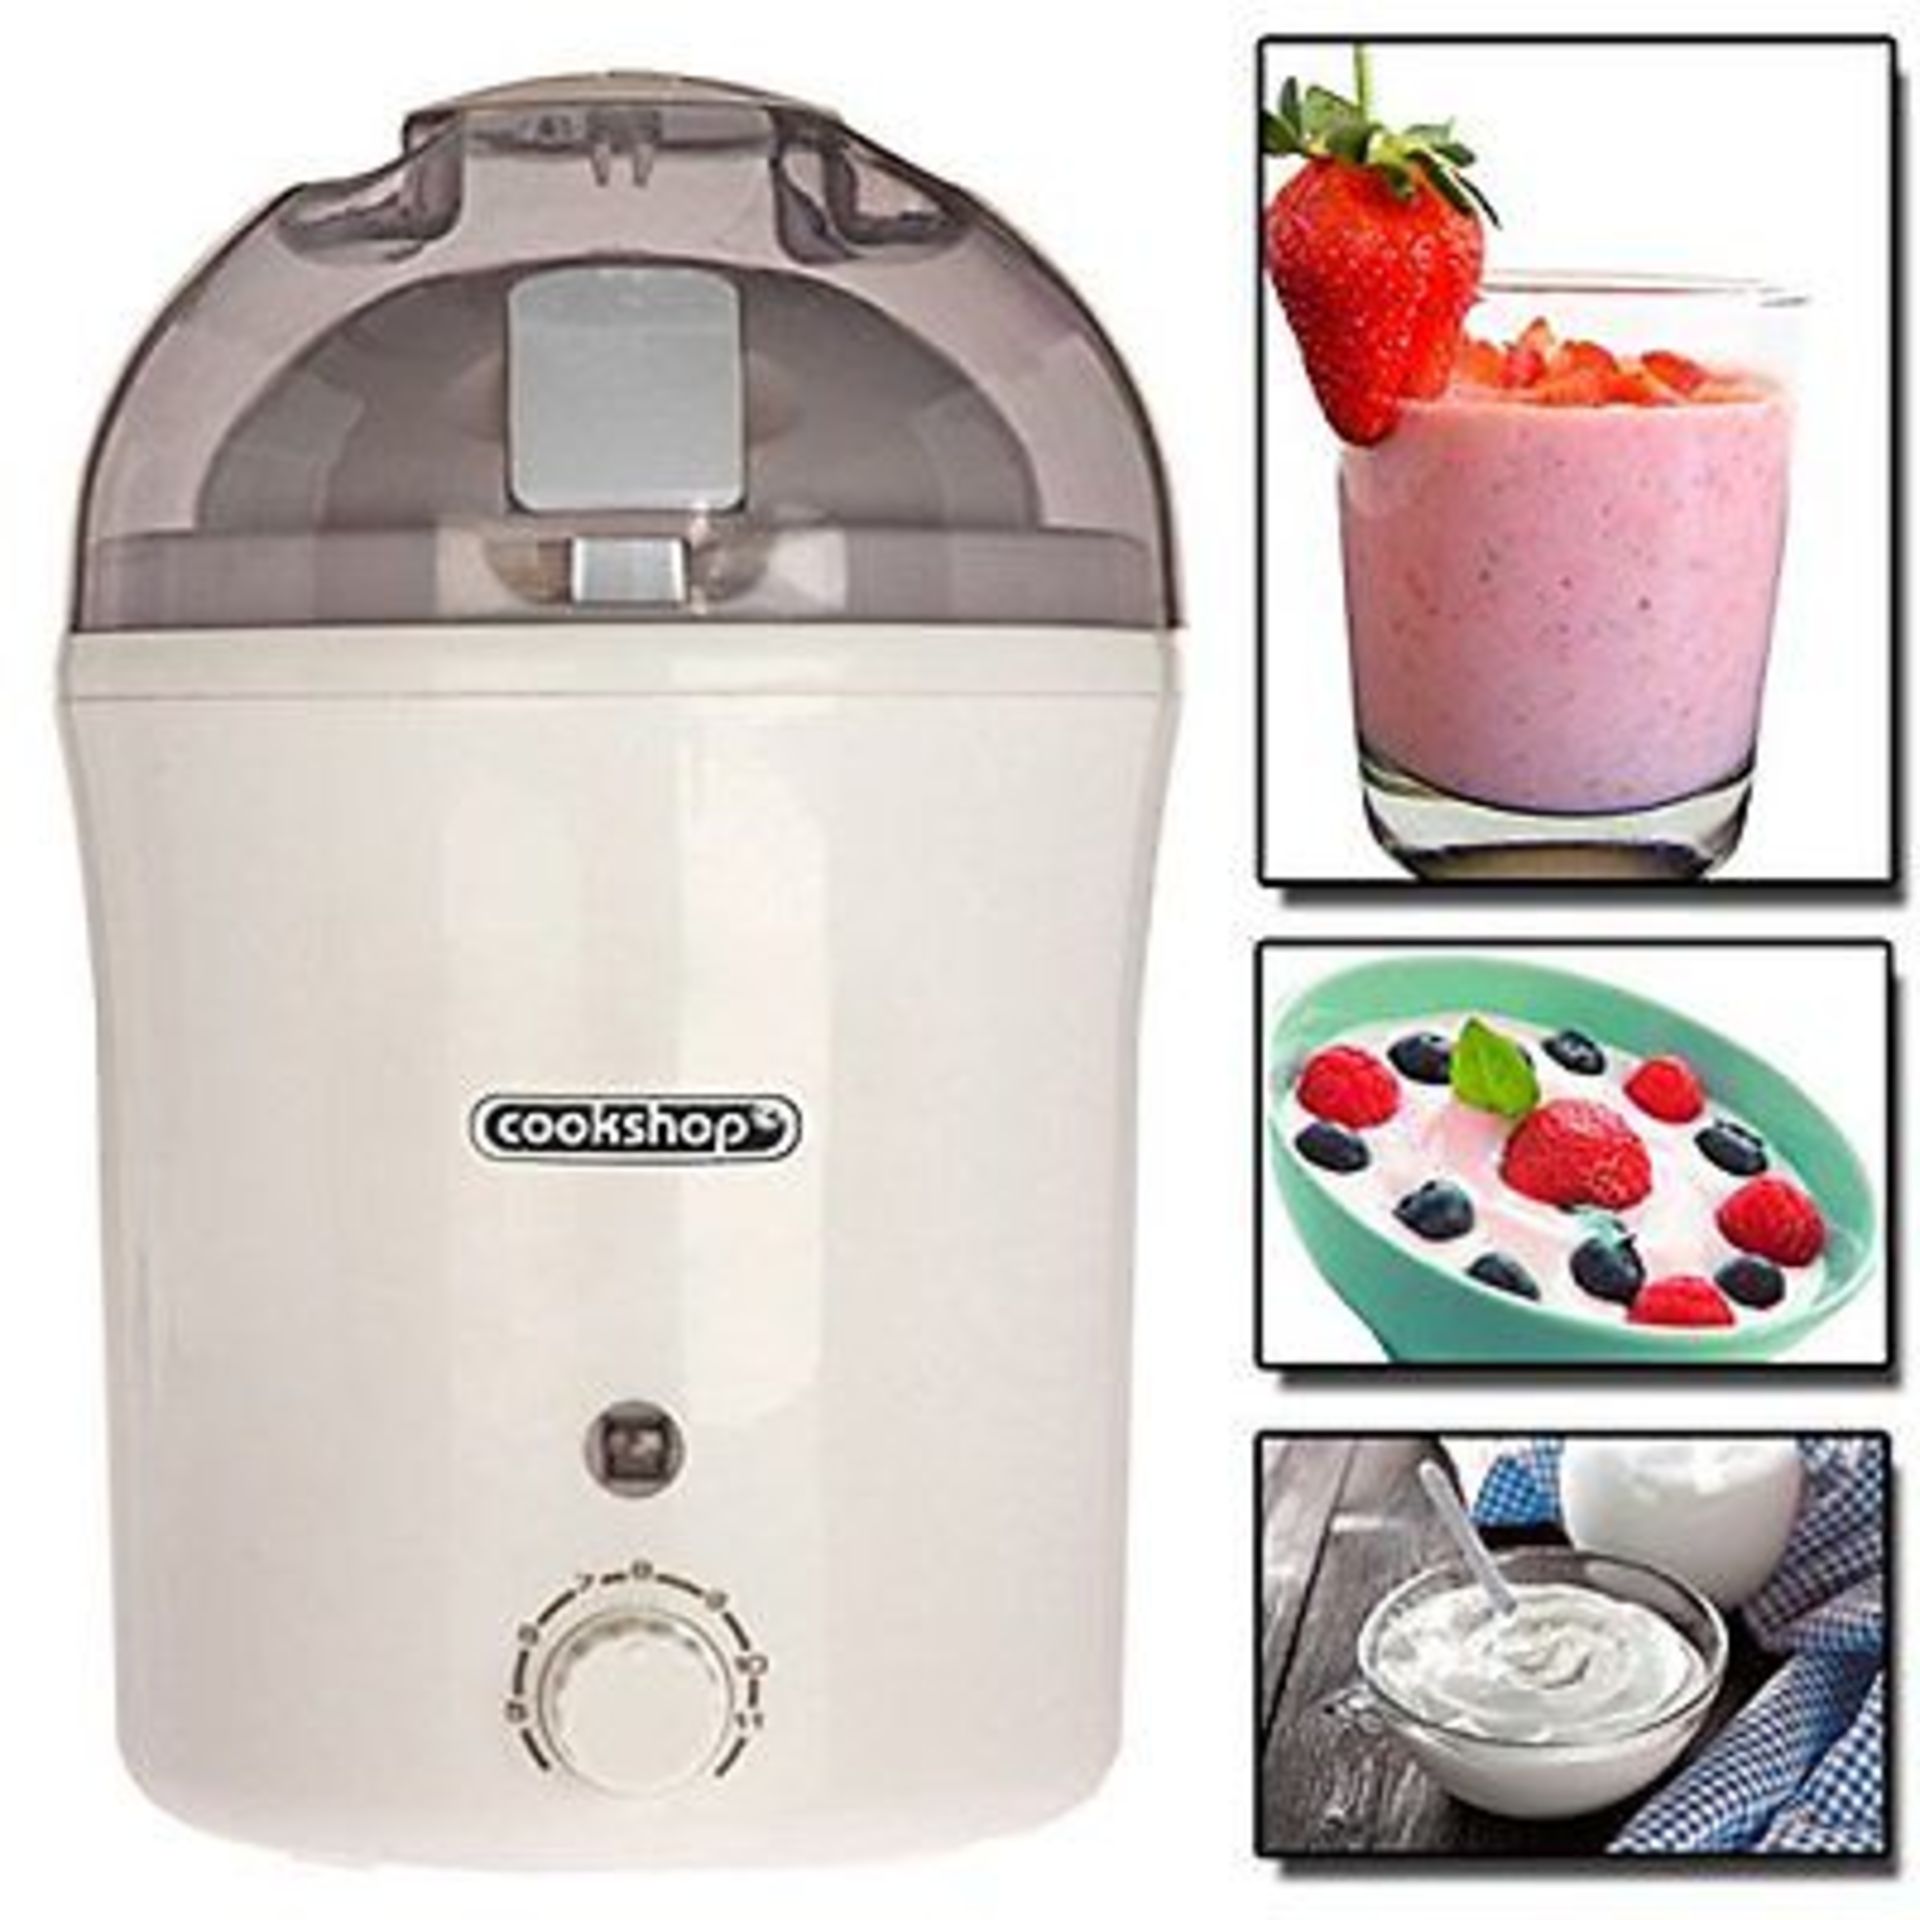 V Brand New Cookshop Electric Yoghurt Maker ISP £22.99 (Ebay)